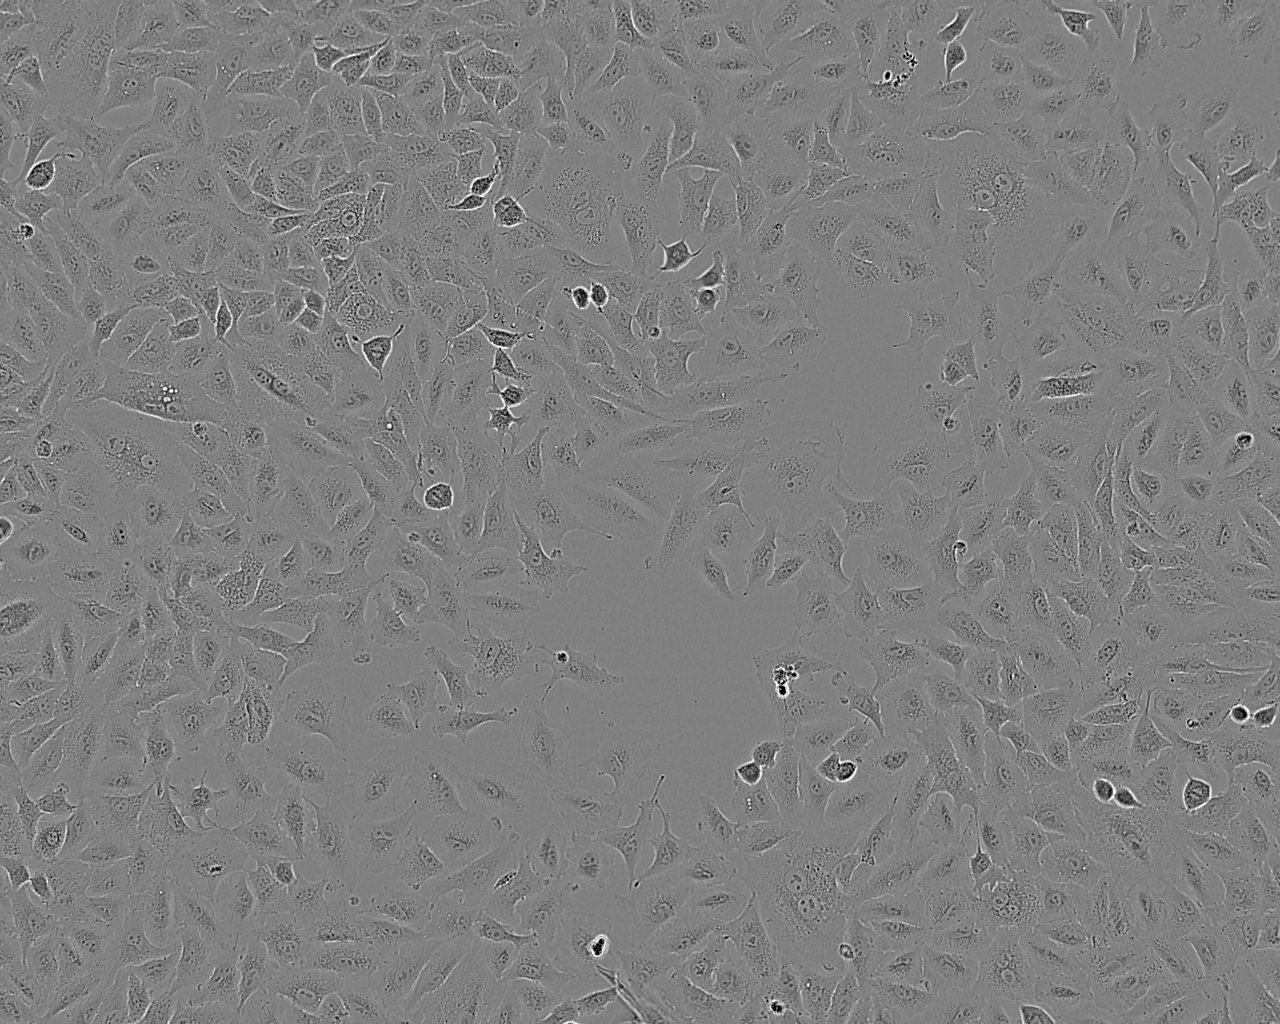 KALS-1 epithelioid cells人神经胶质瘤细胞系,KALS-1 epithelioid cells